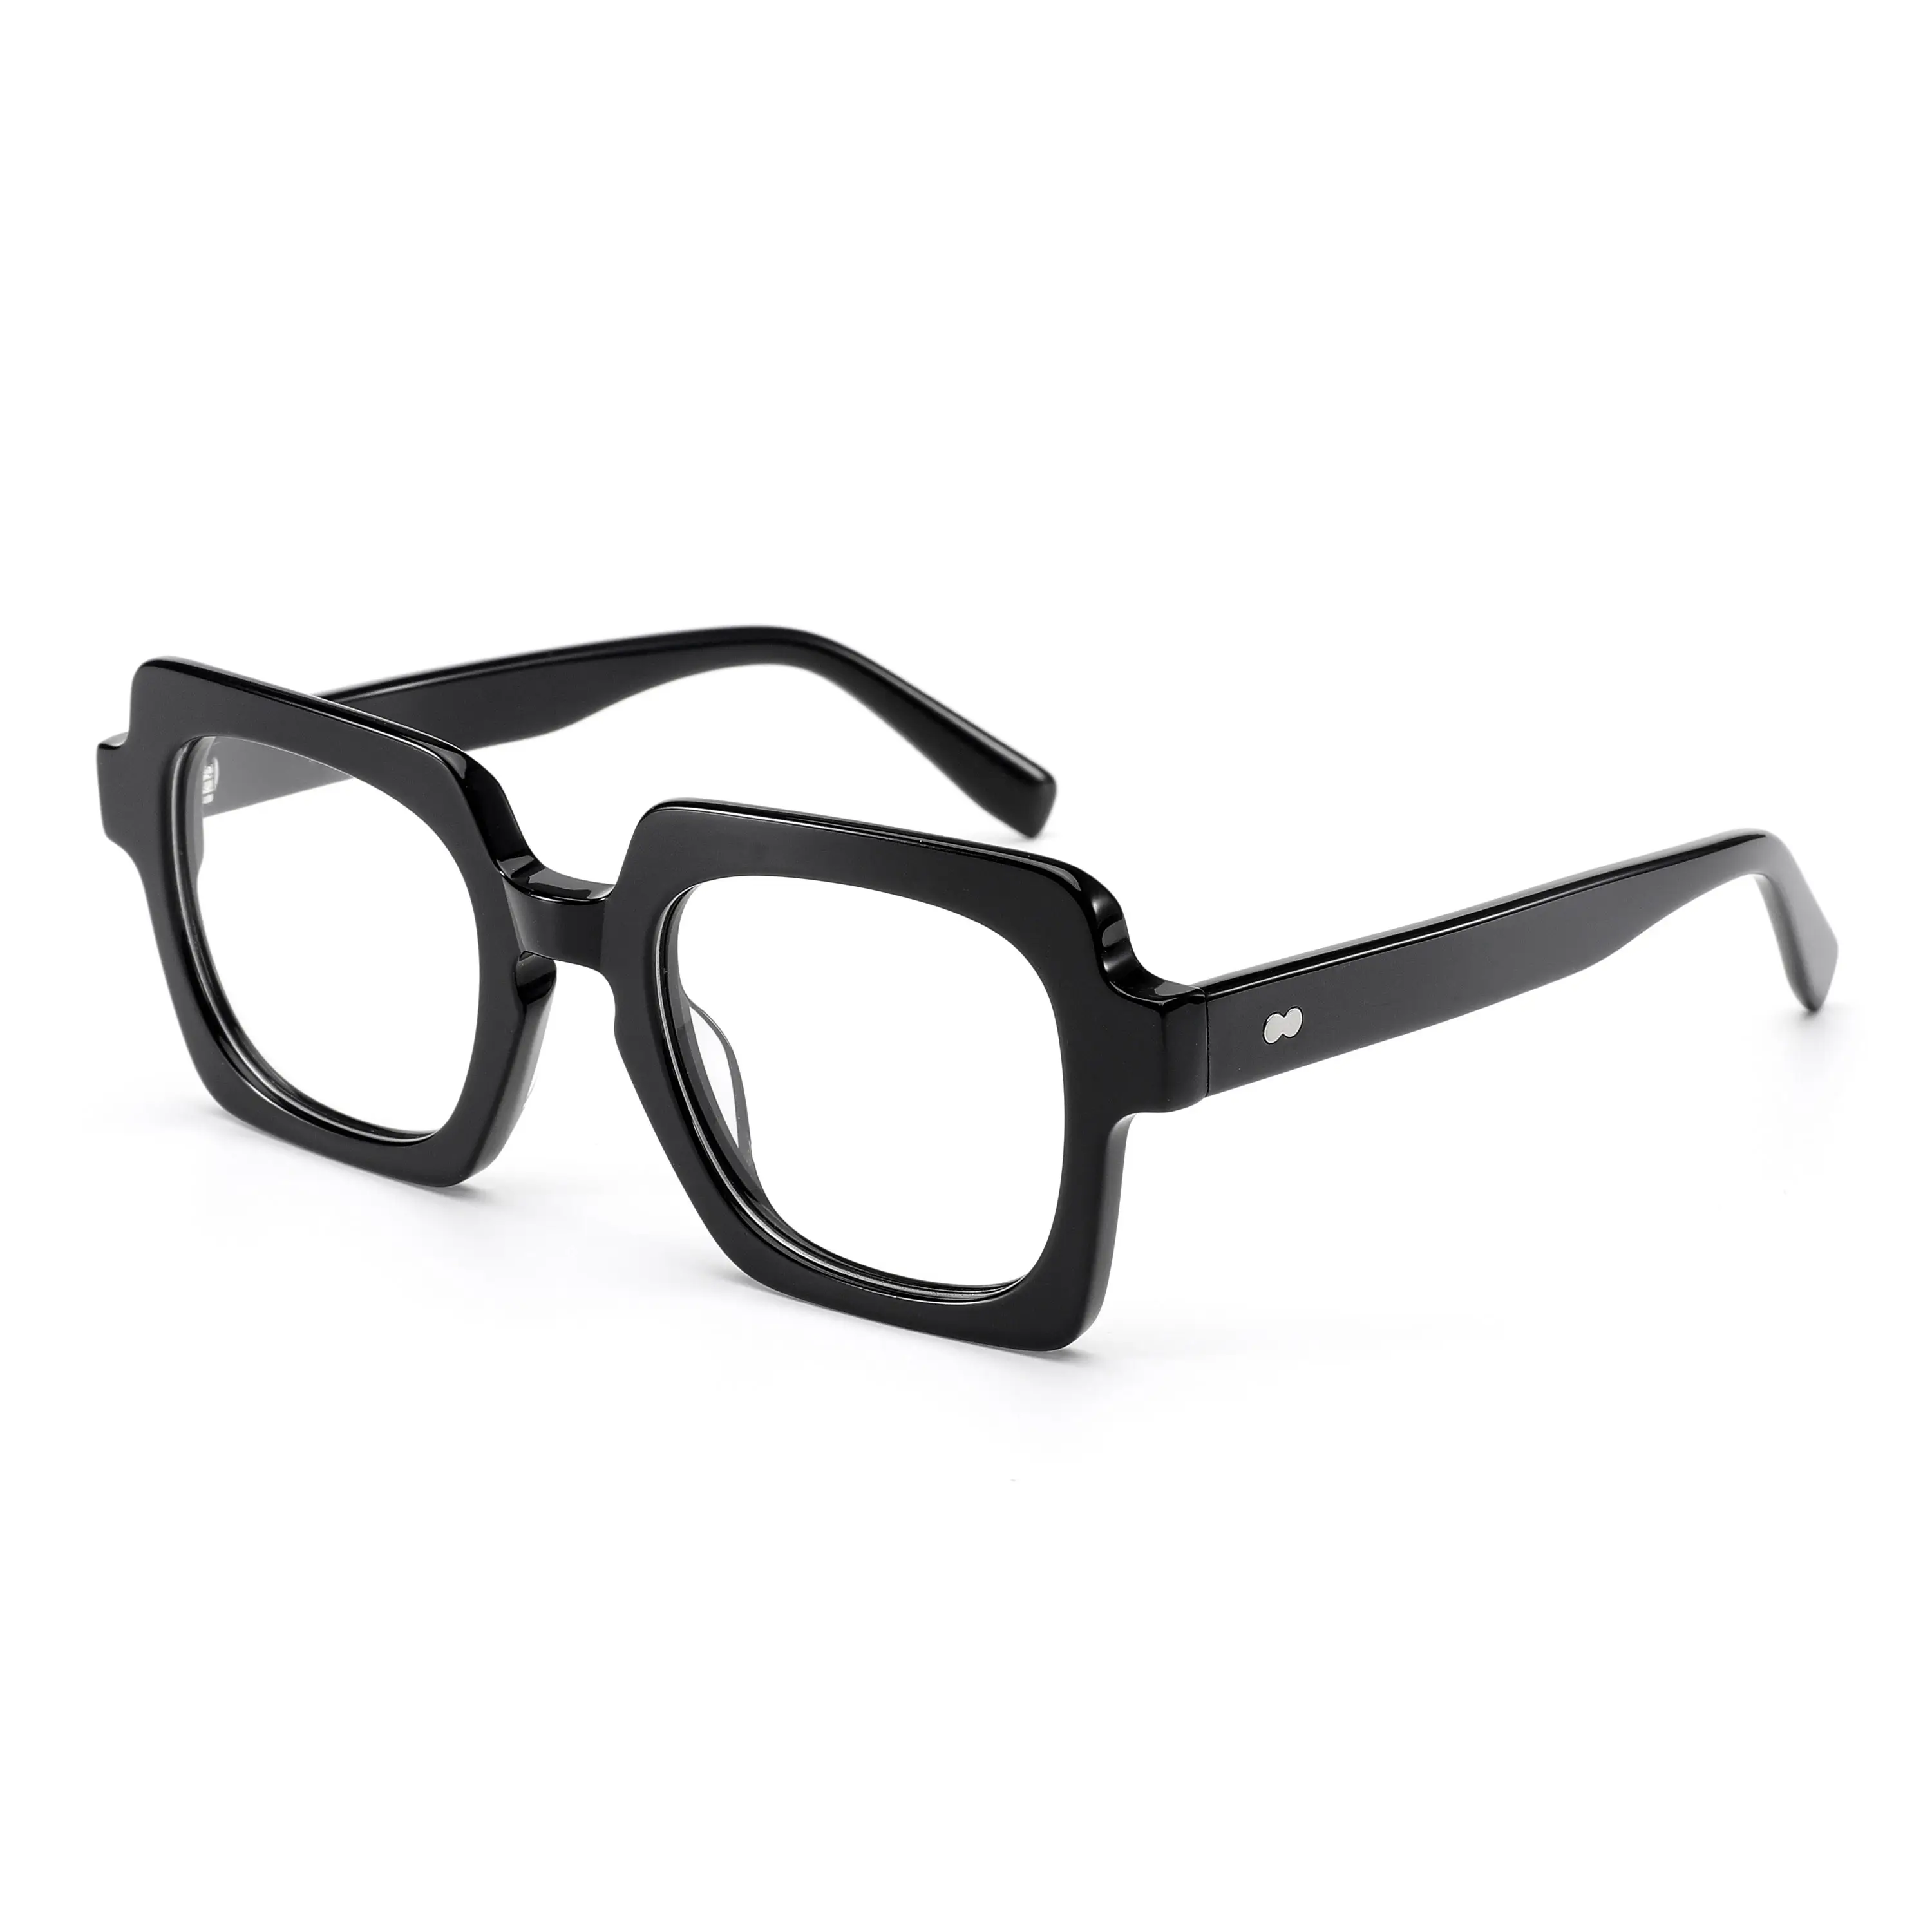 Bingkai kacamata persegi kualitas tinggi desainer Retro mewah asetat kacamata bingkai kacamata optik Pria